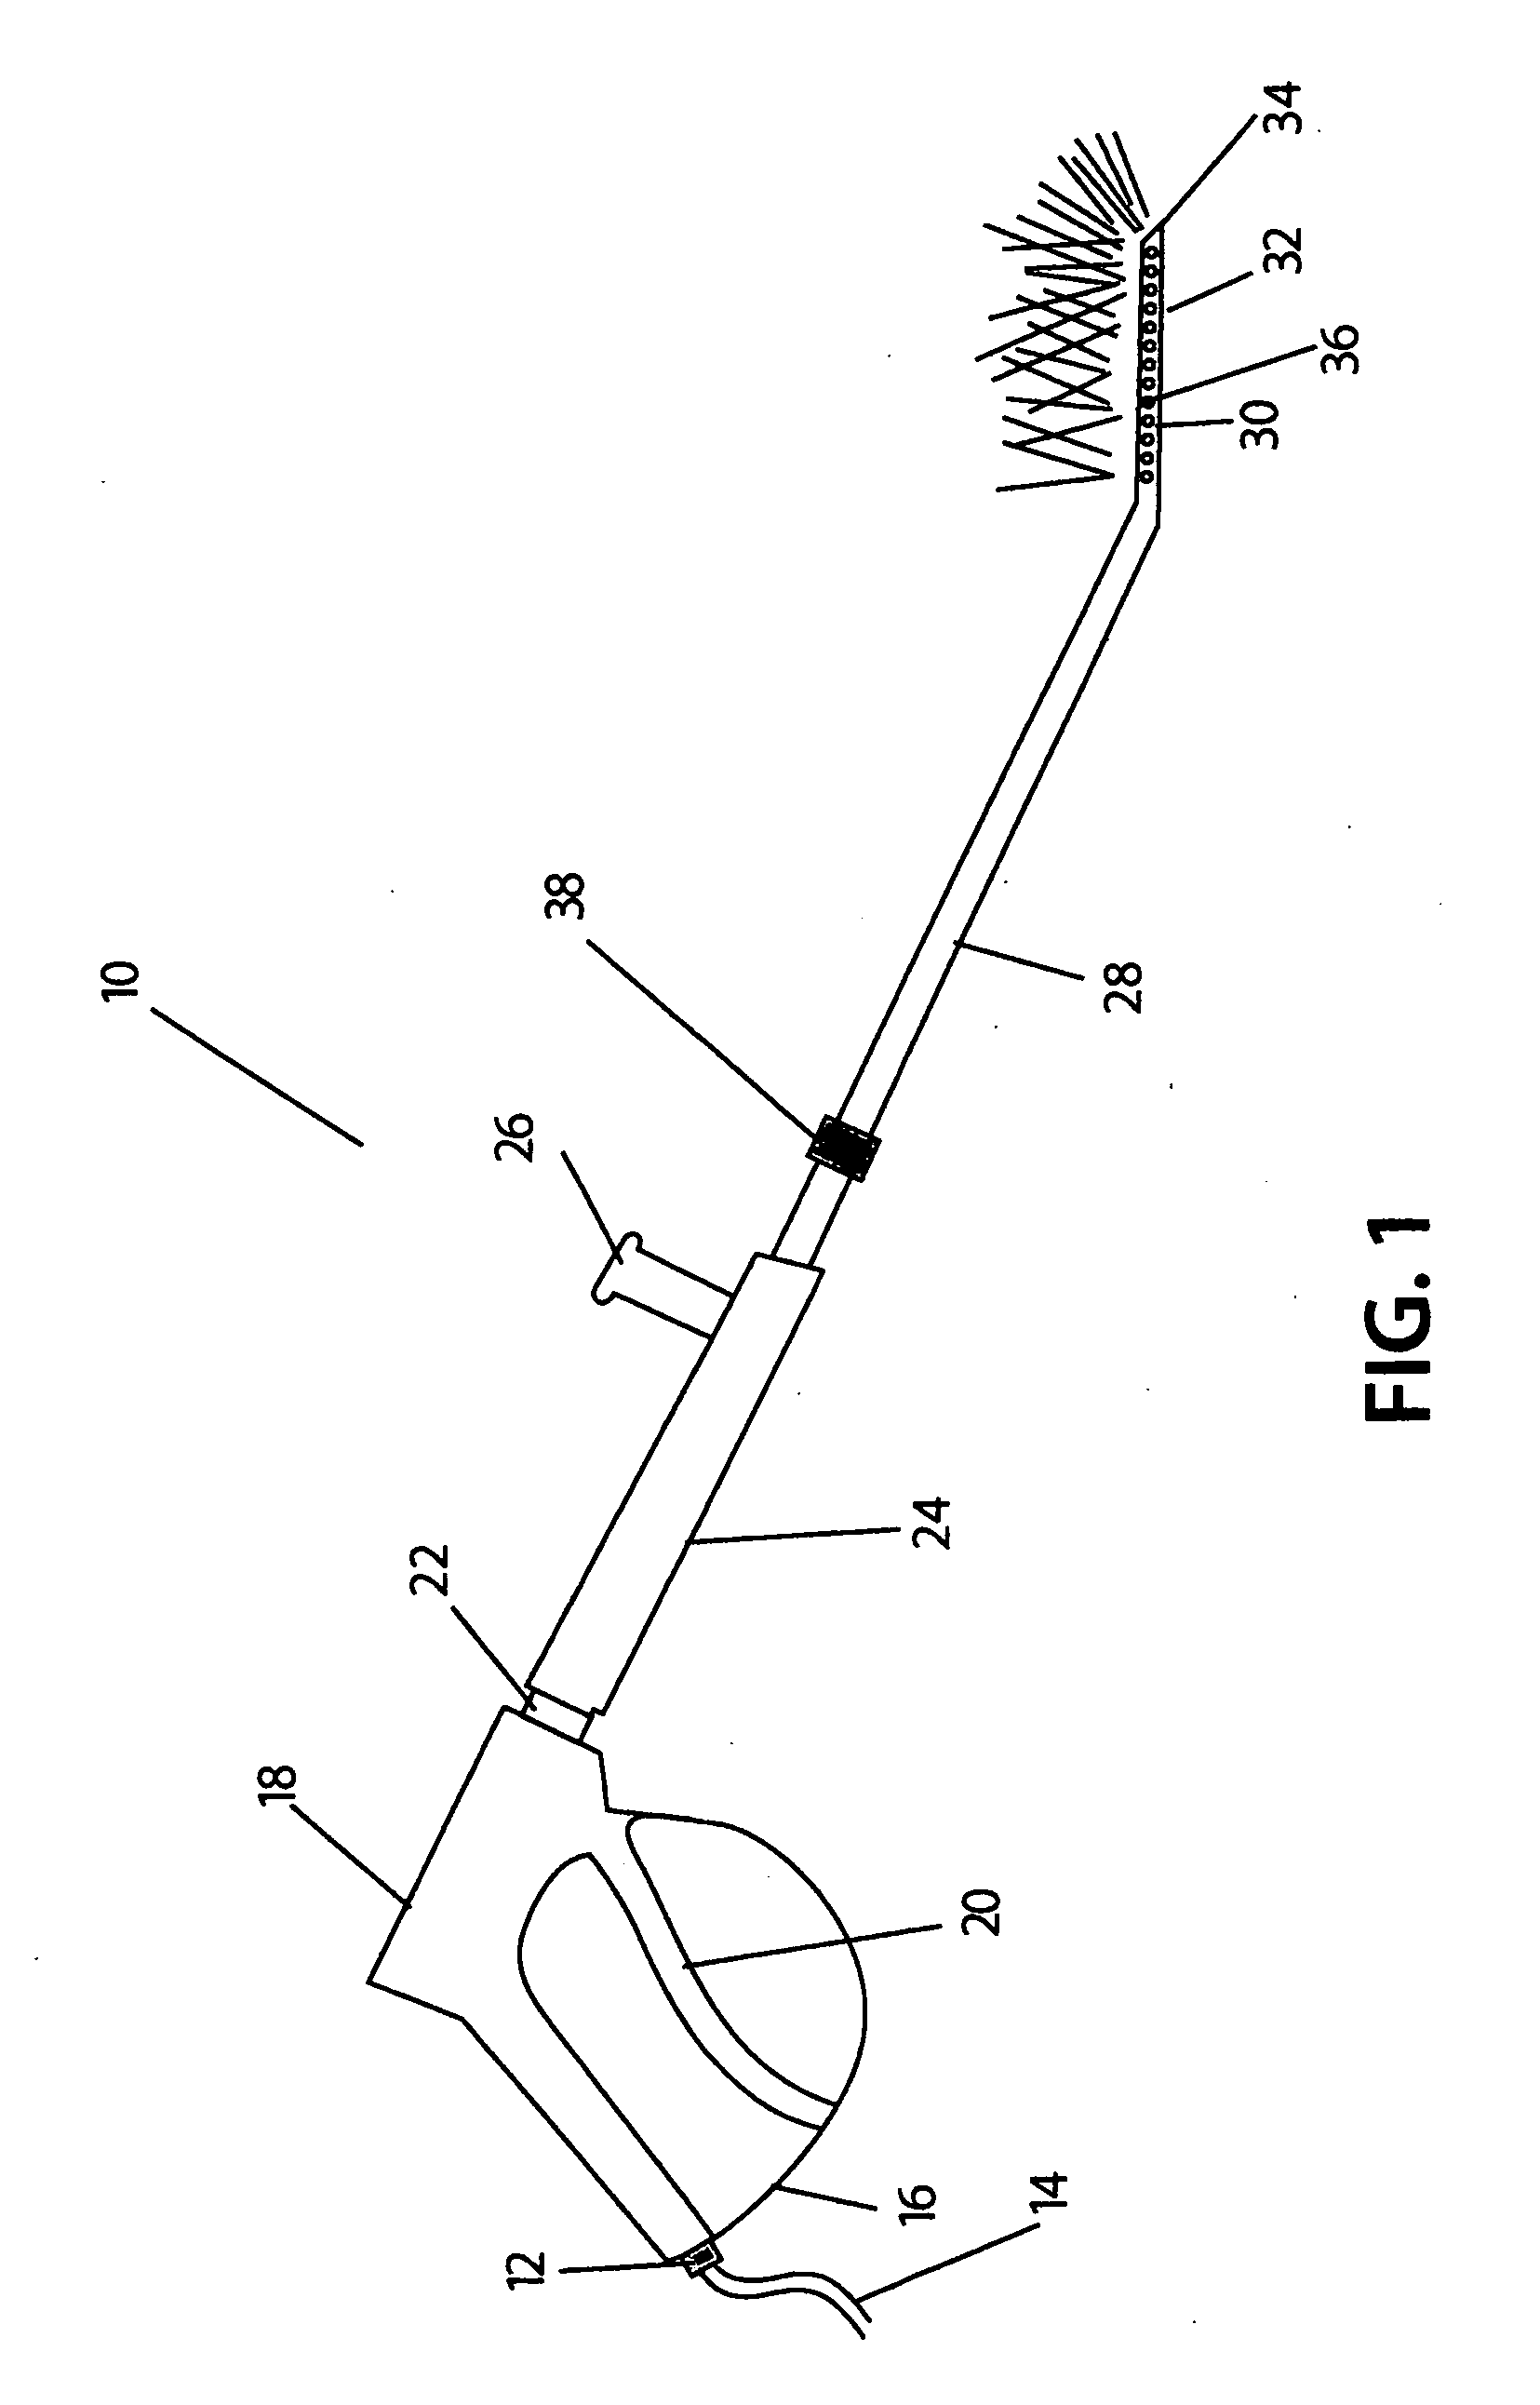 Fluid flush device with optional telescopic wand